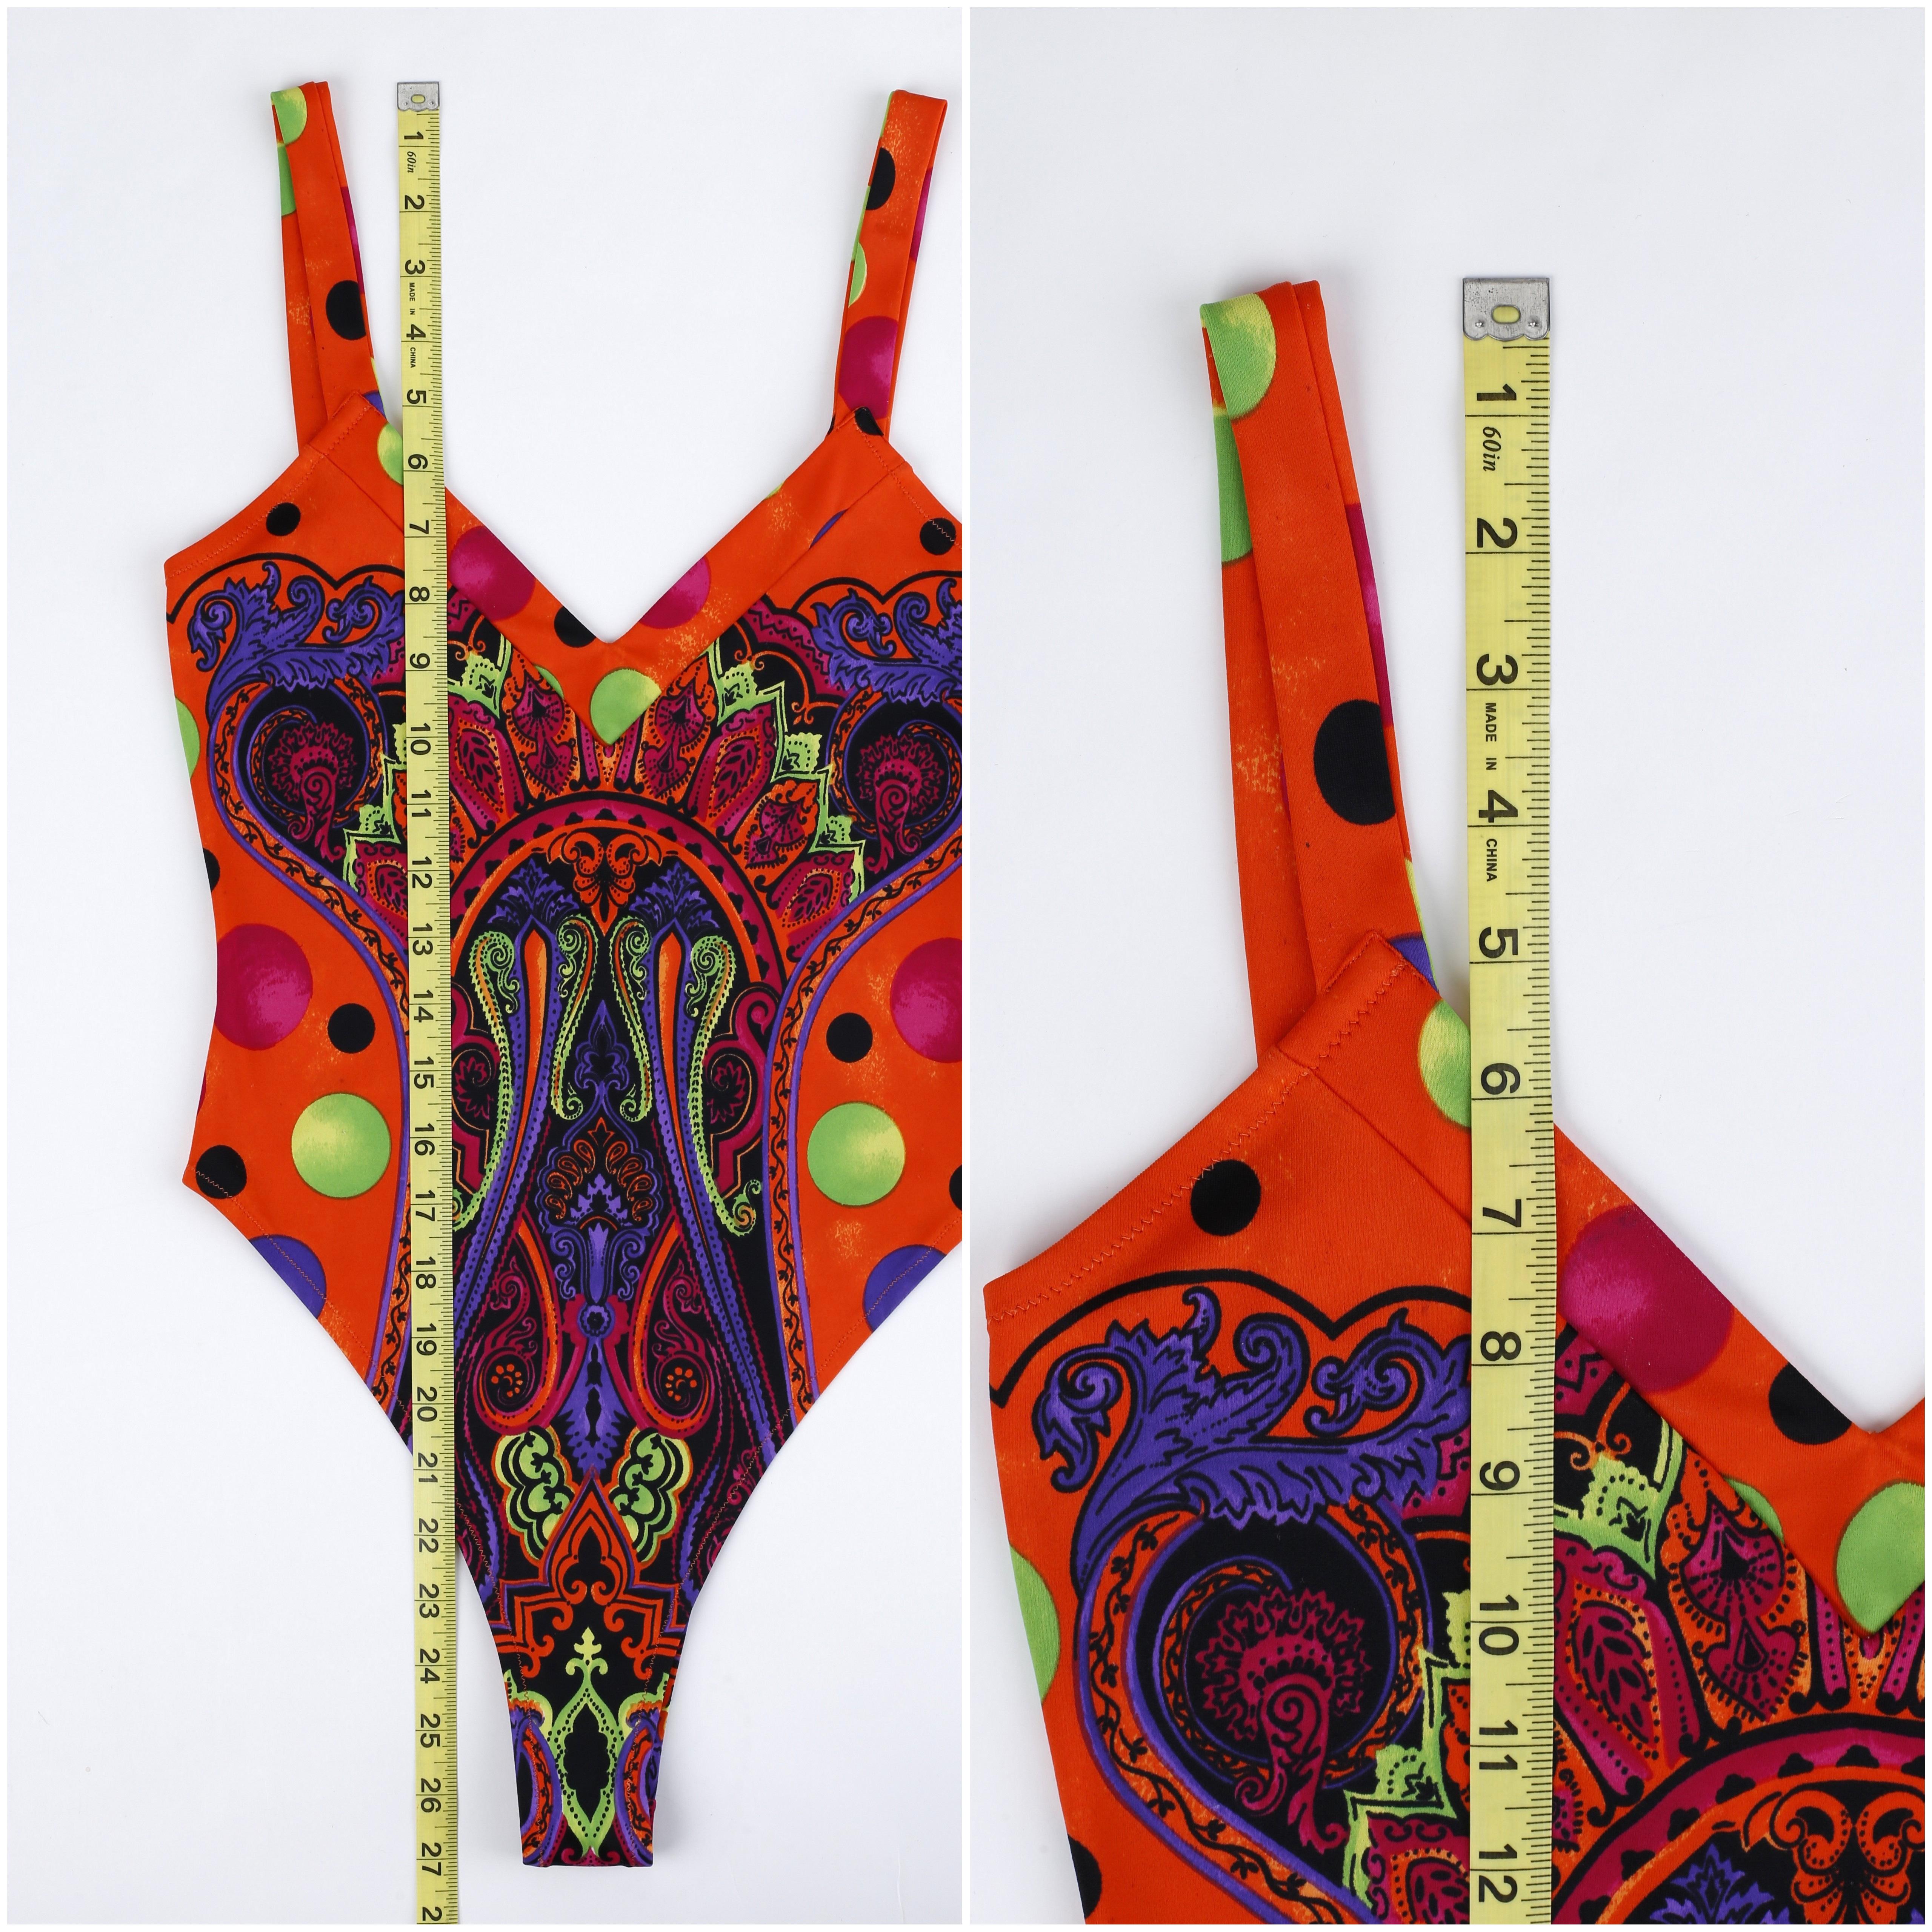 Gianni Versace S/S 1991 Pop Art Baroque Print Swimsuit Bodysuit & Leggings Set For Sale 4